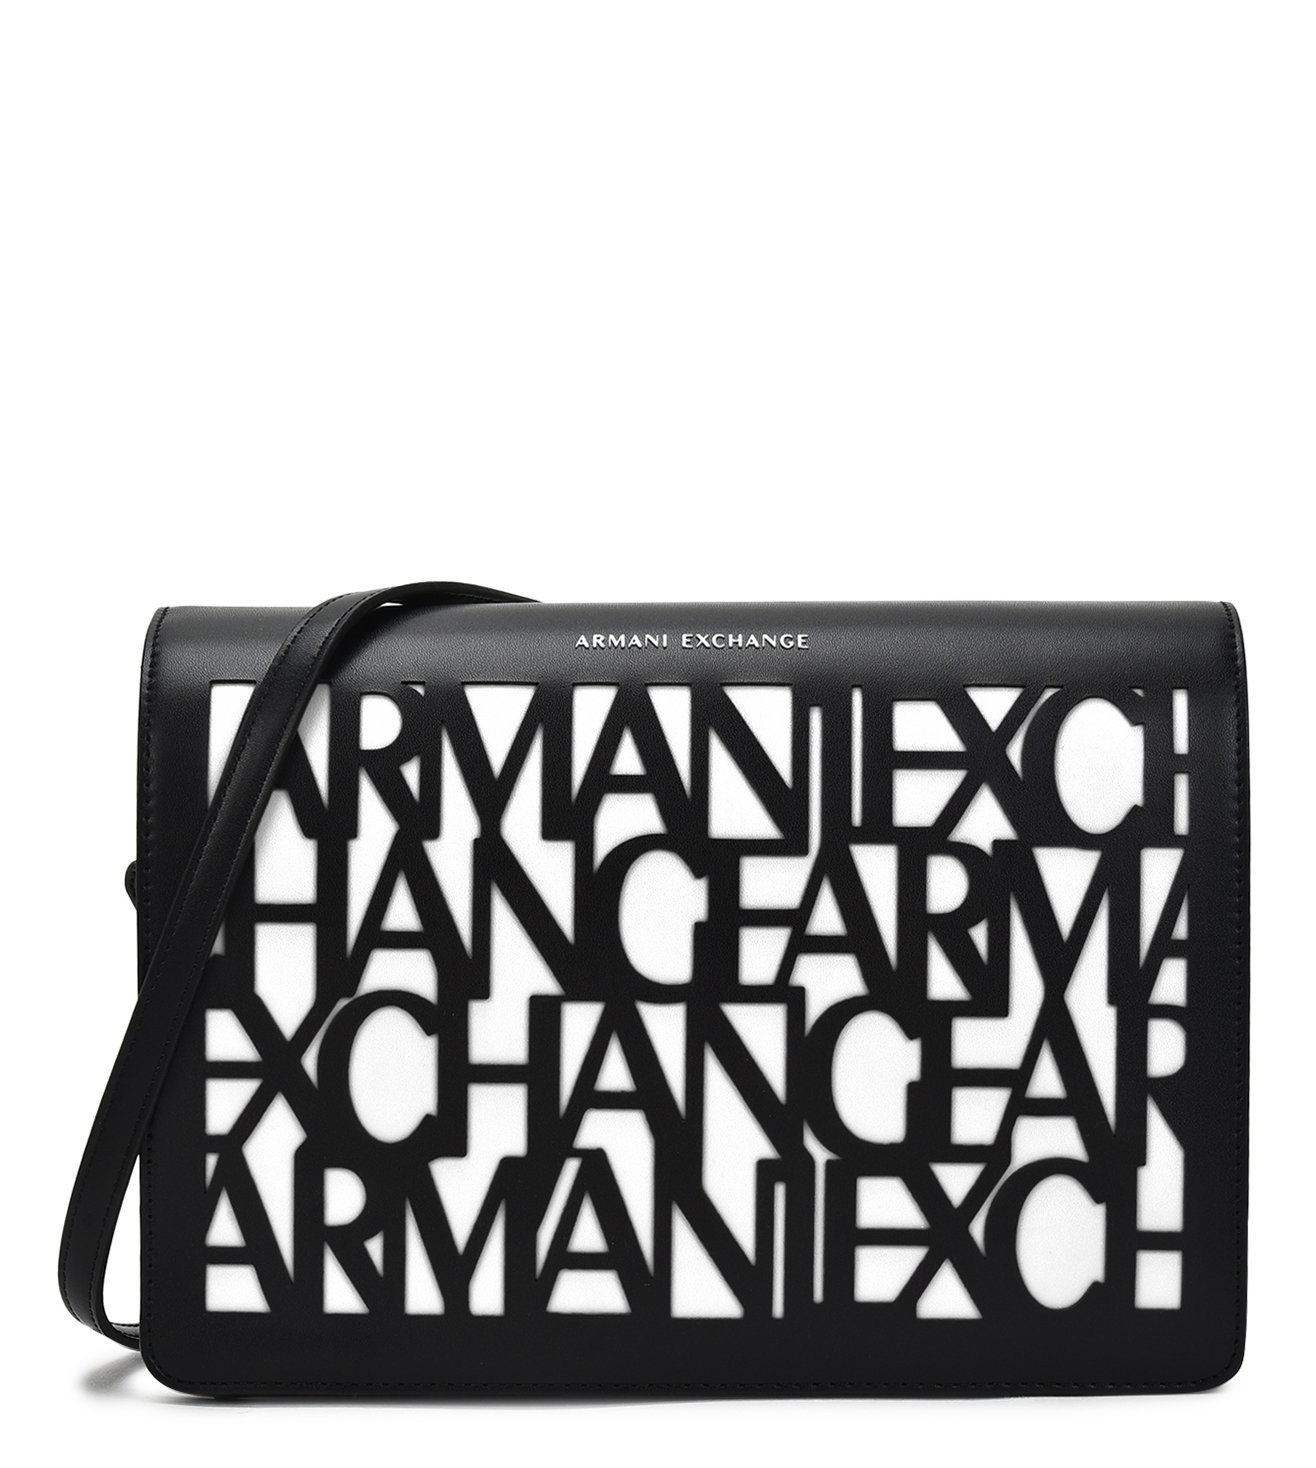 armani exchange black bag